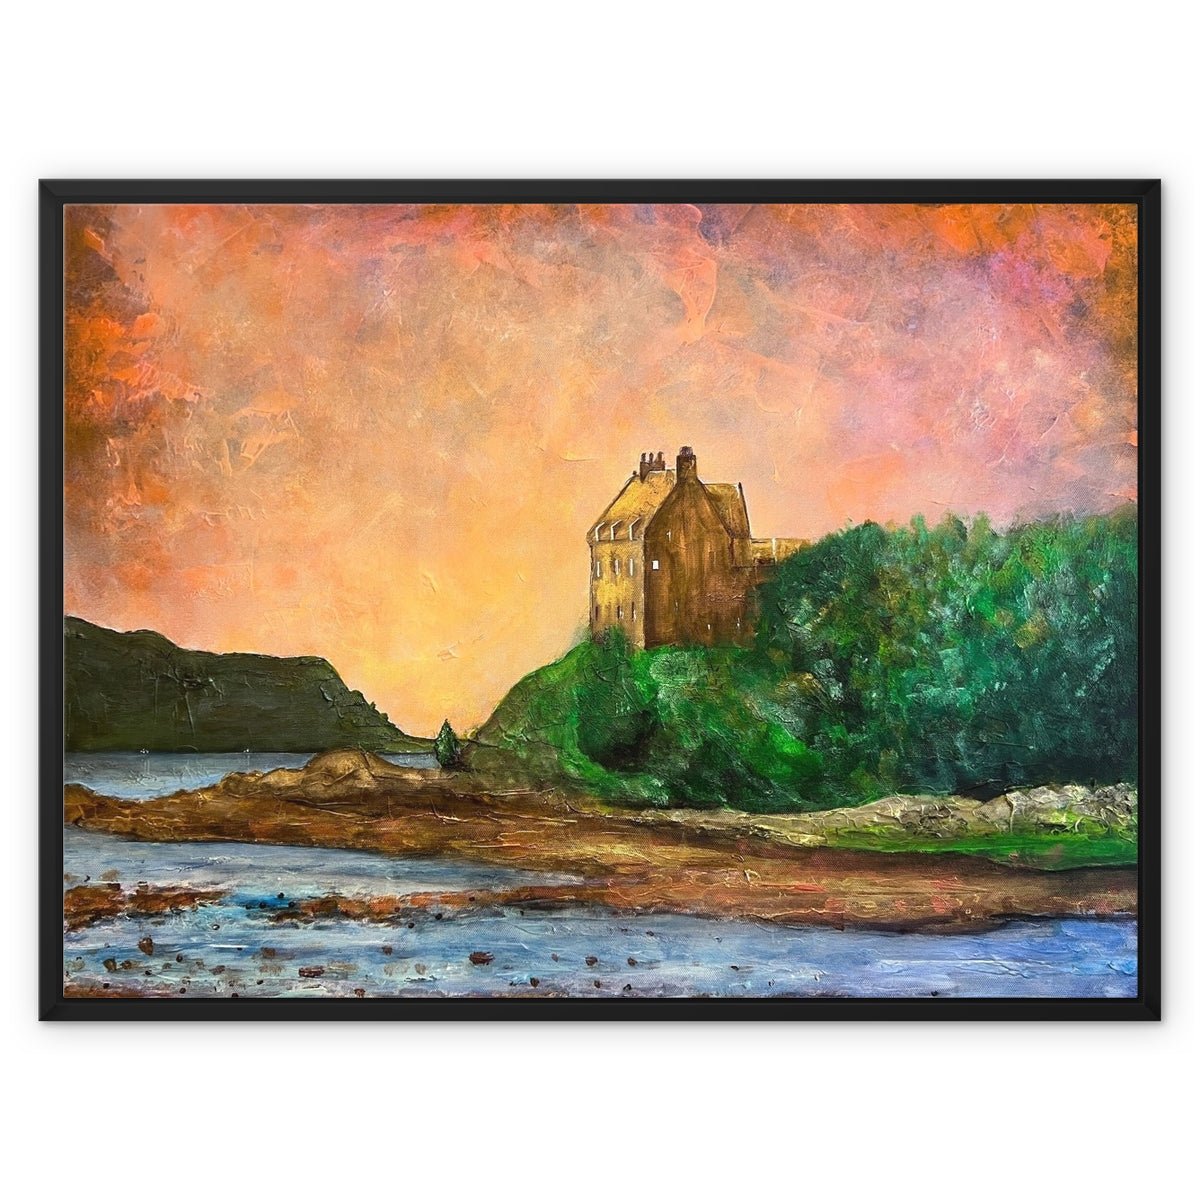 Duntrune Castle Painting | Framed Canvas From Scotland-Floating Framed Canvas Prints-Scottish Castles Art Gallery-32"x24"-Black Frame-Paintings, Prints, Homeware, Art Gifts From Scotland By Scottish Artist Kevin Hunter